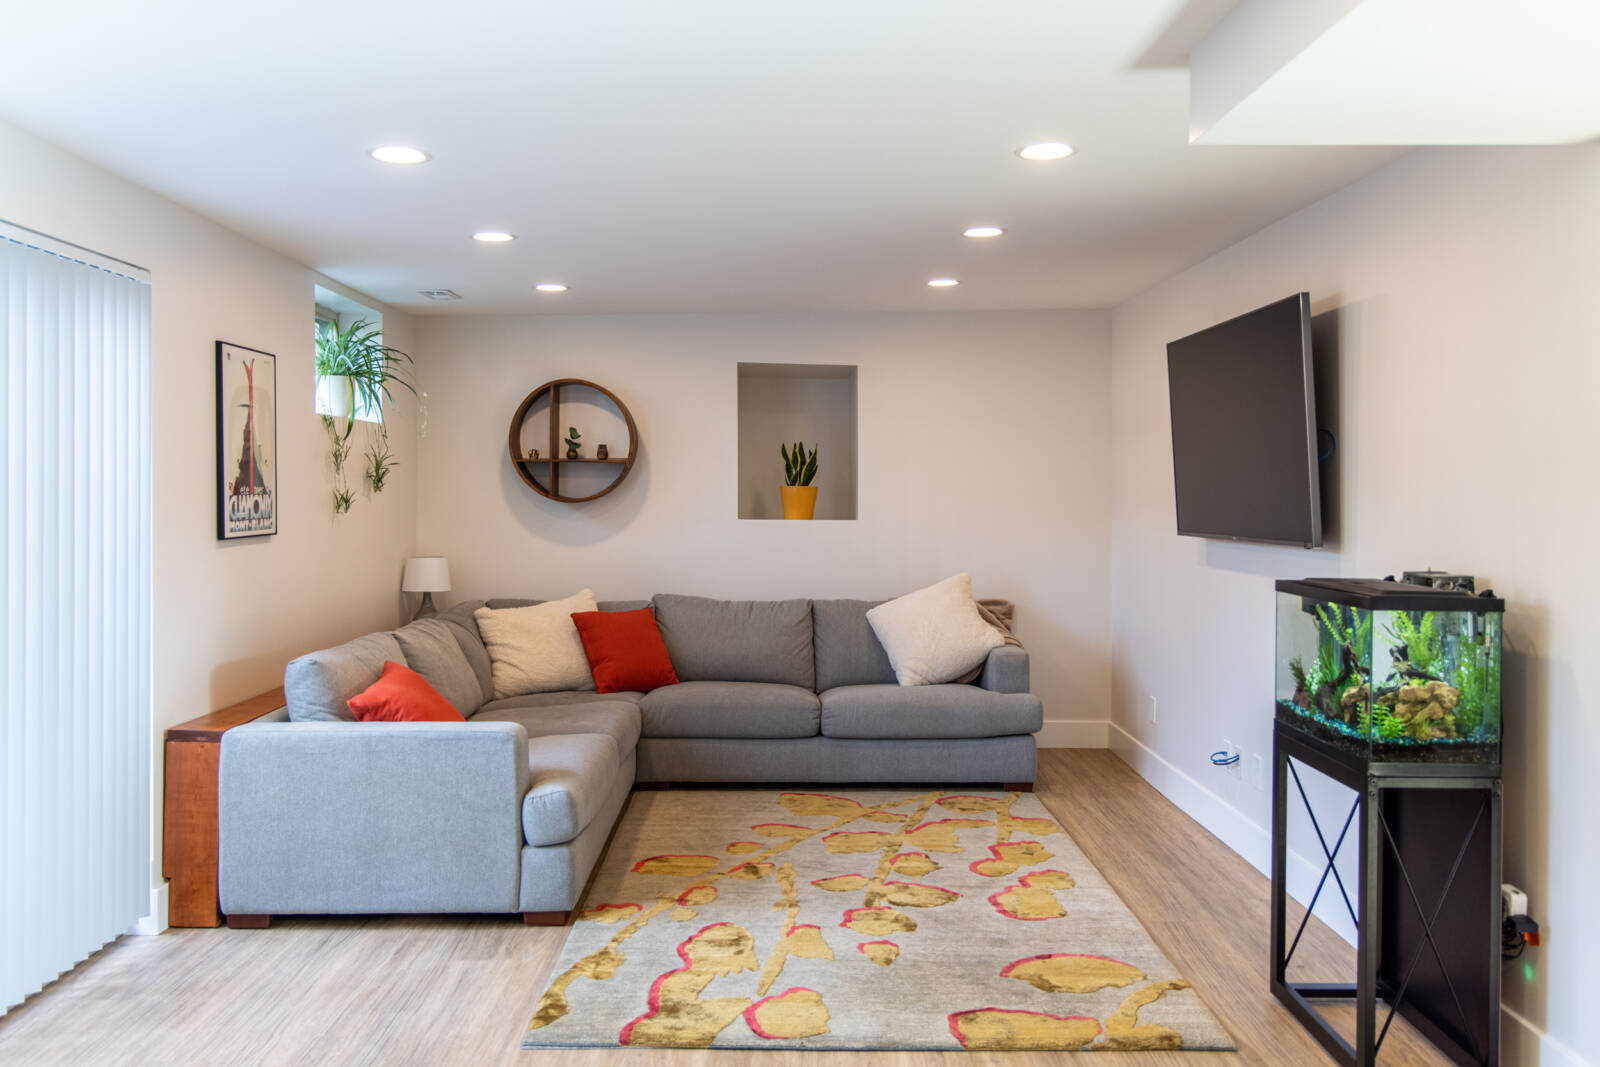 Bungalow, basement living room ideas, modern trditional